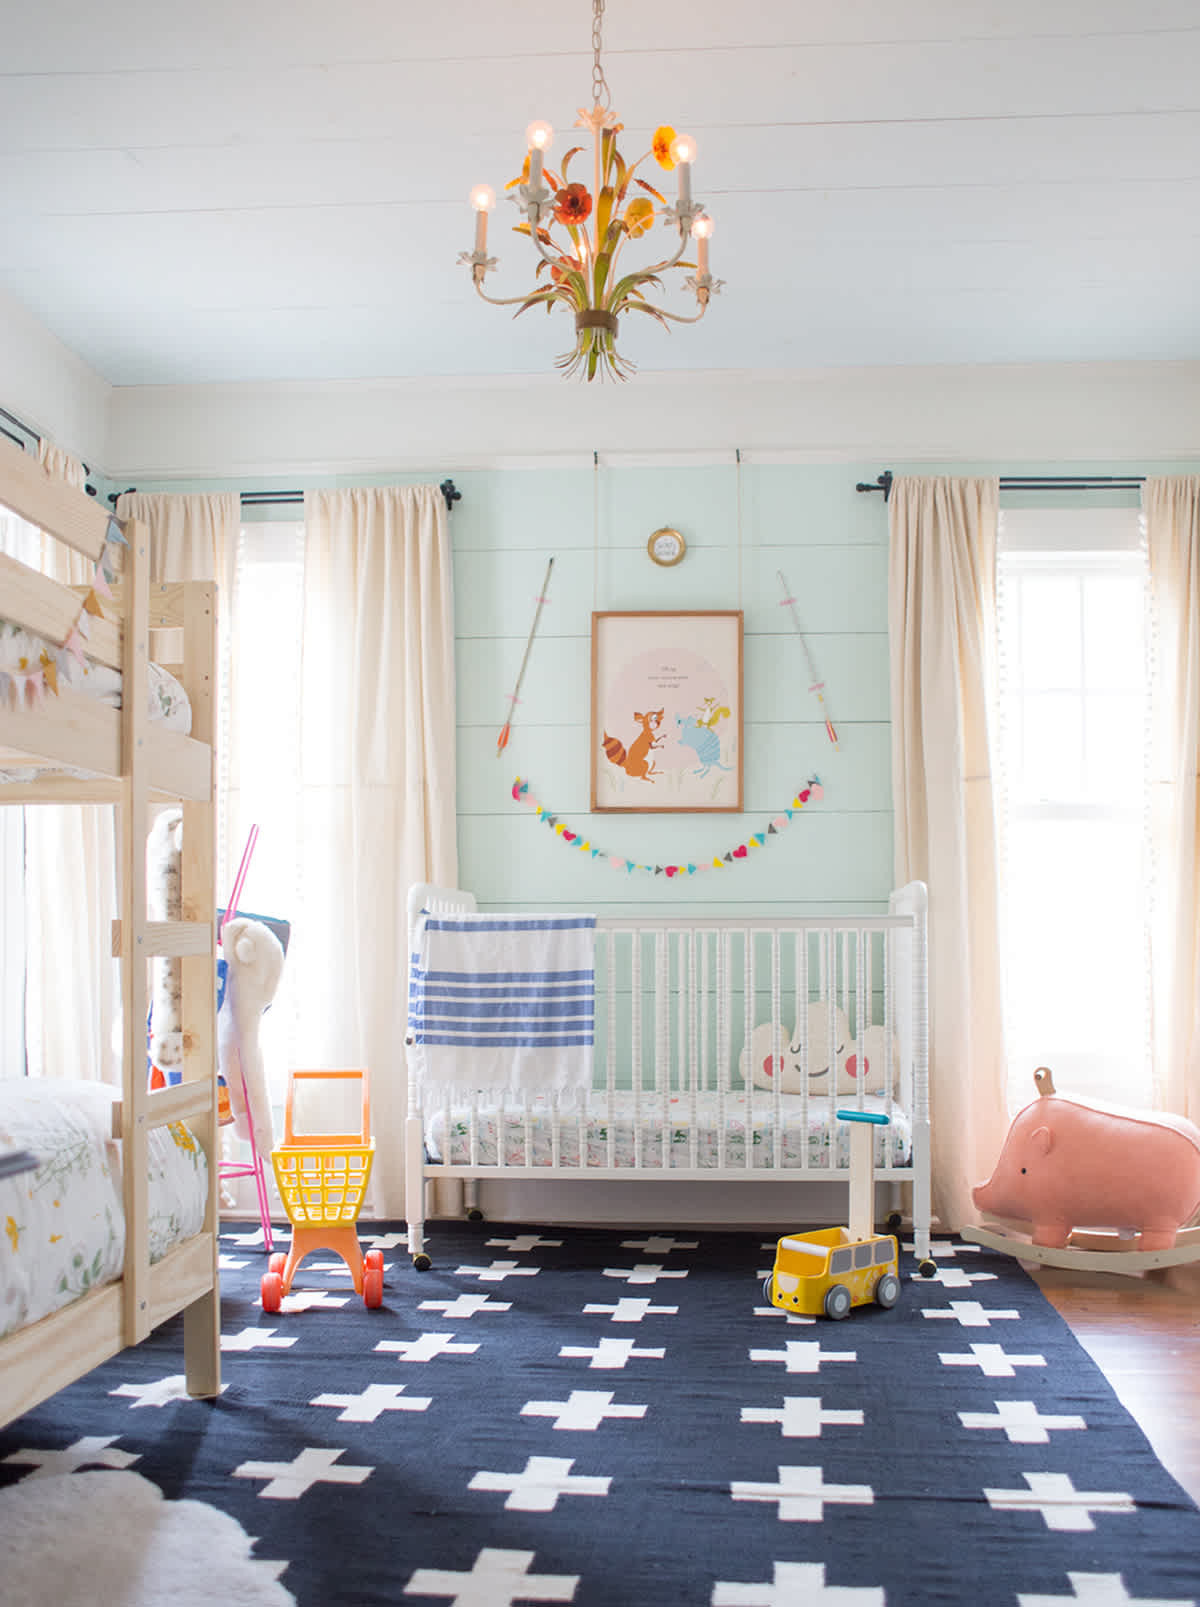 Paint Colors For Kids Rooms
 My Favorite Paint Colors For Kids Rooms And Baby Rooms